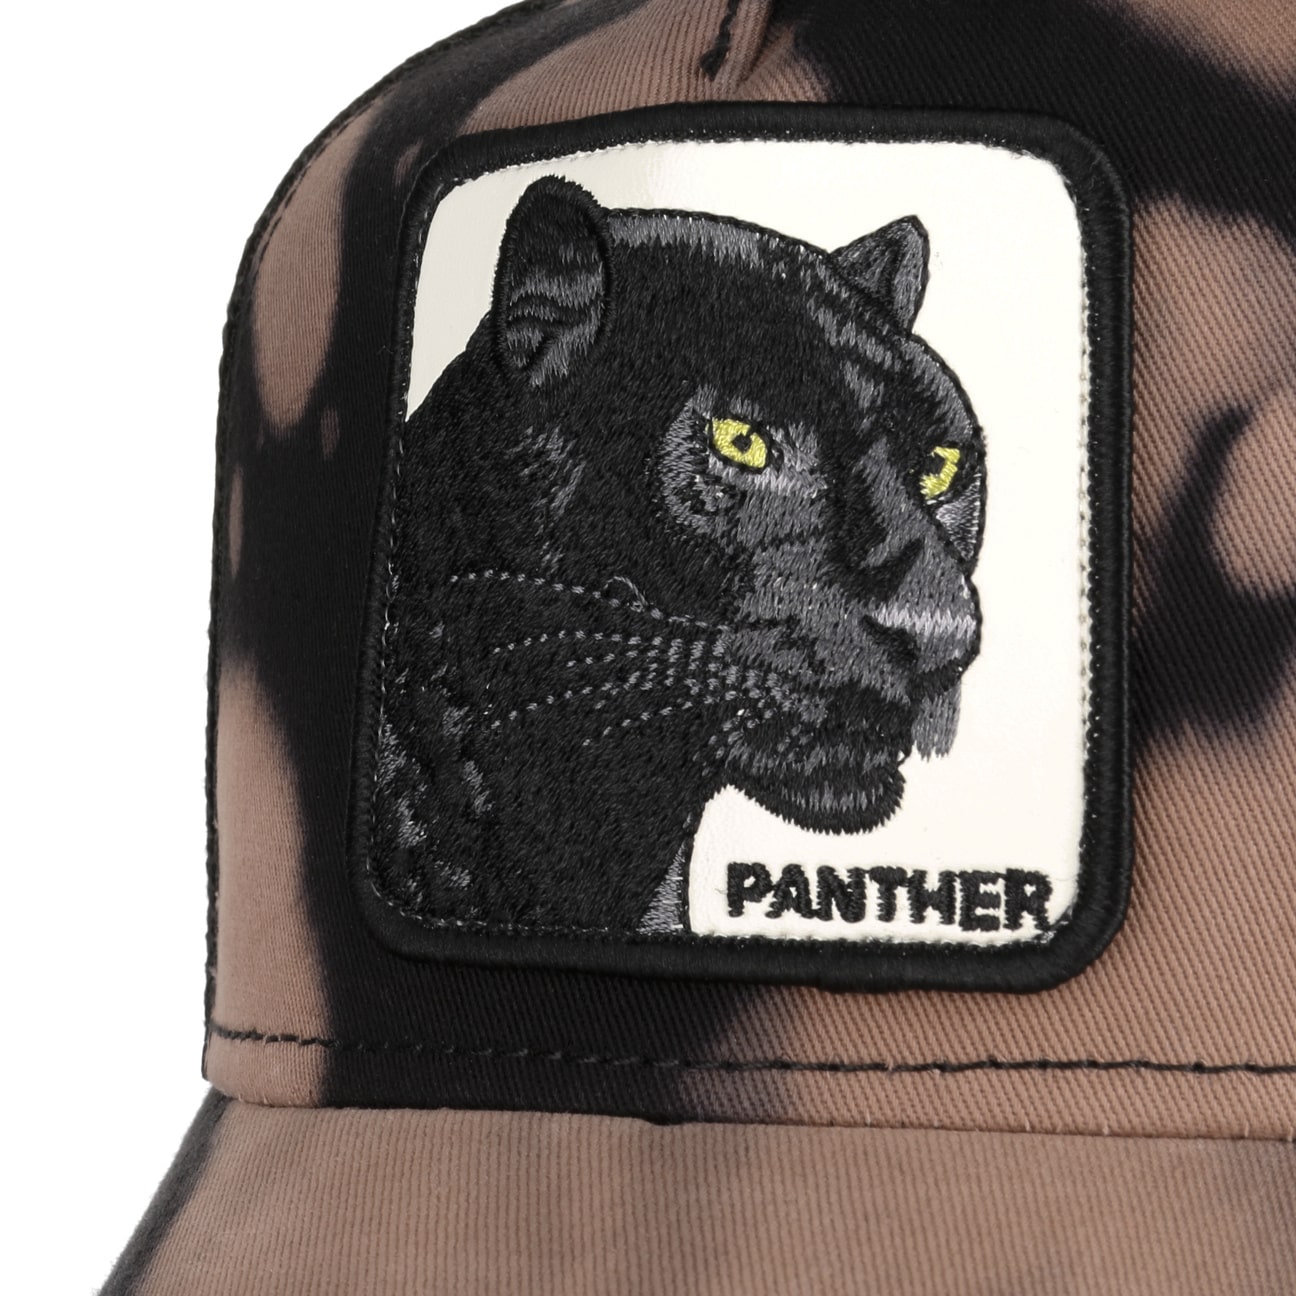 Acid Panther Trucker Cap by Goorin Bros. - 48,95 €